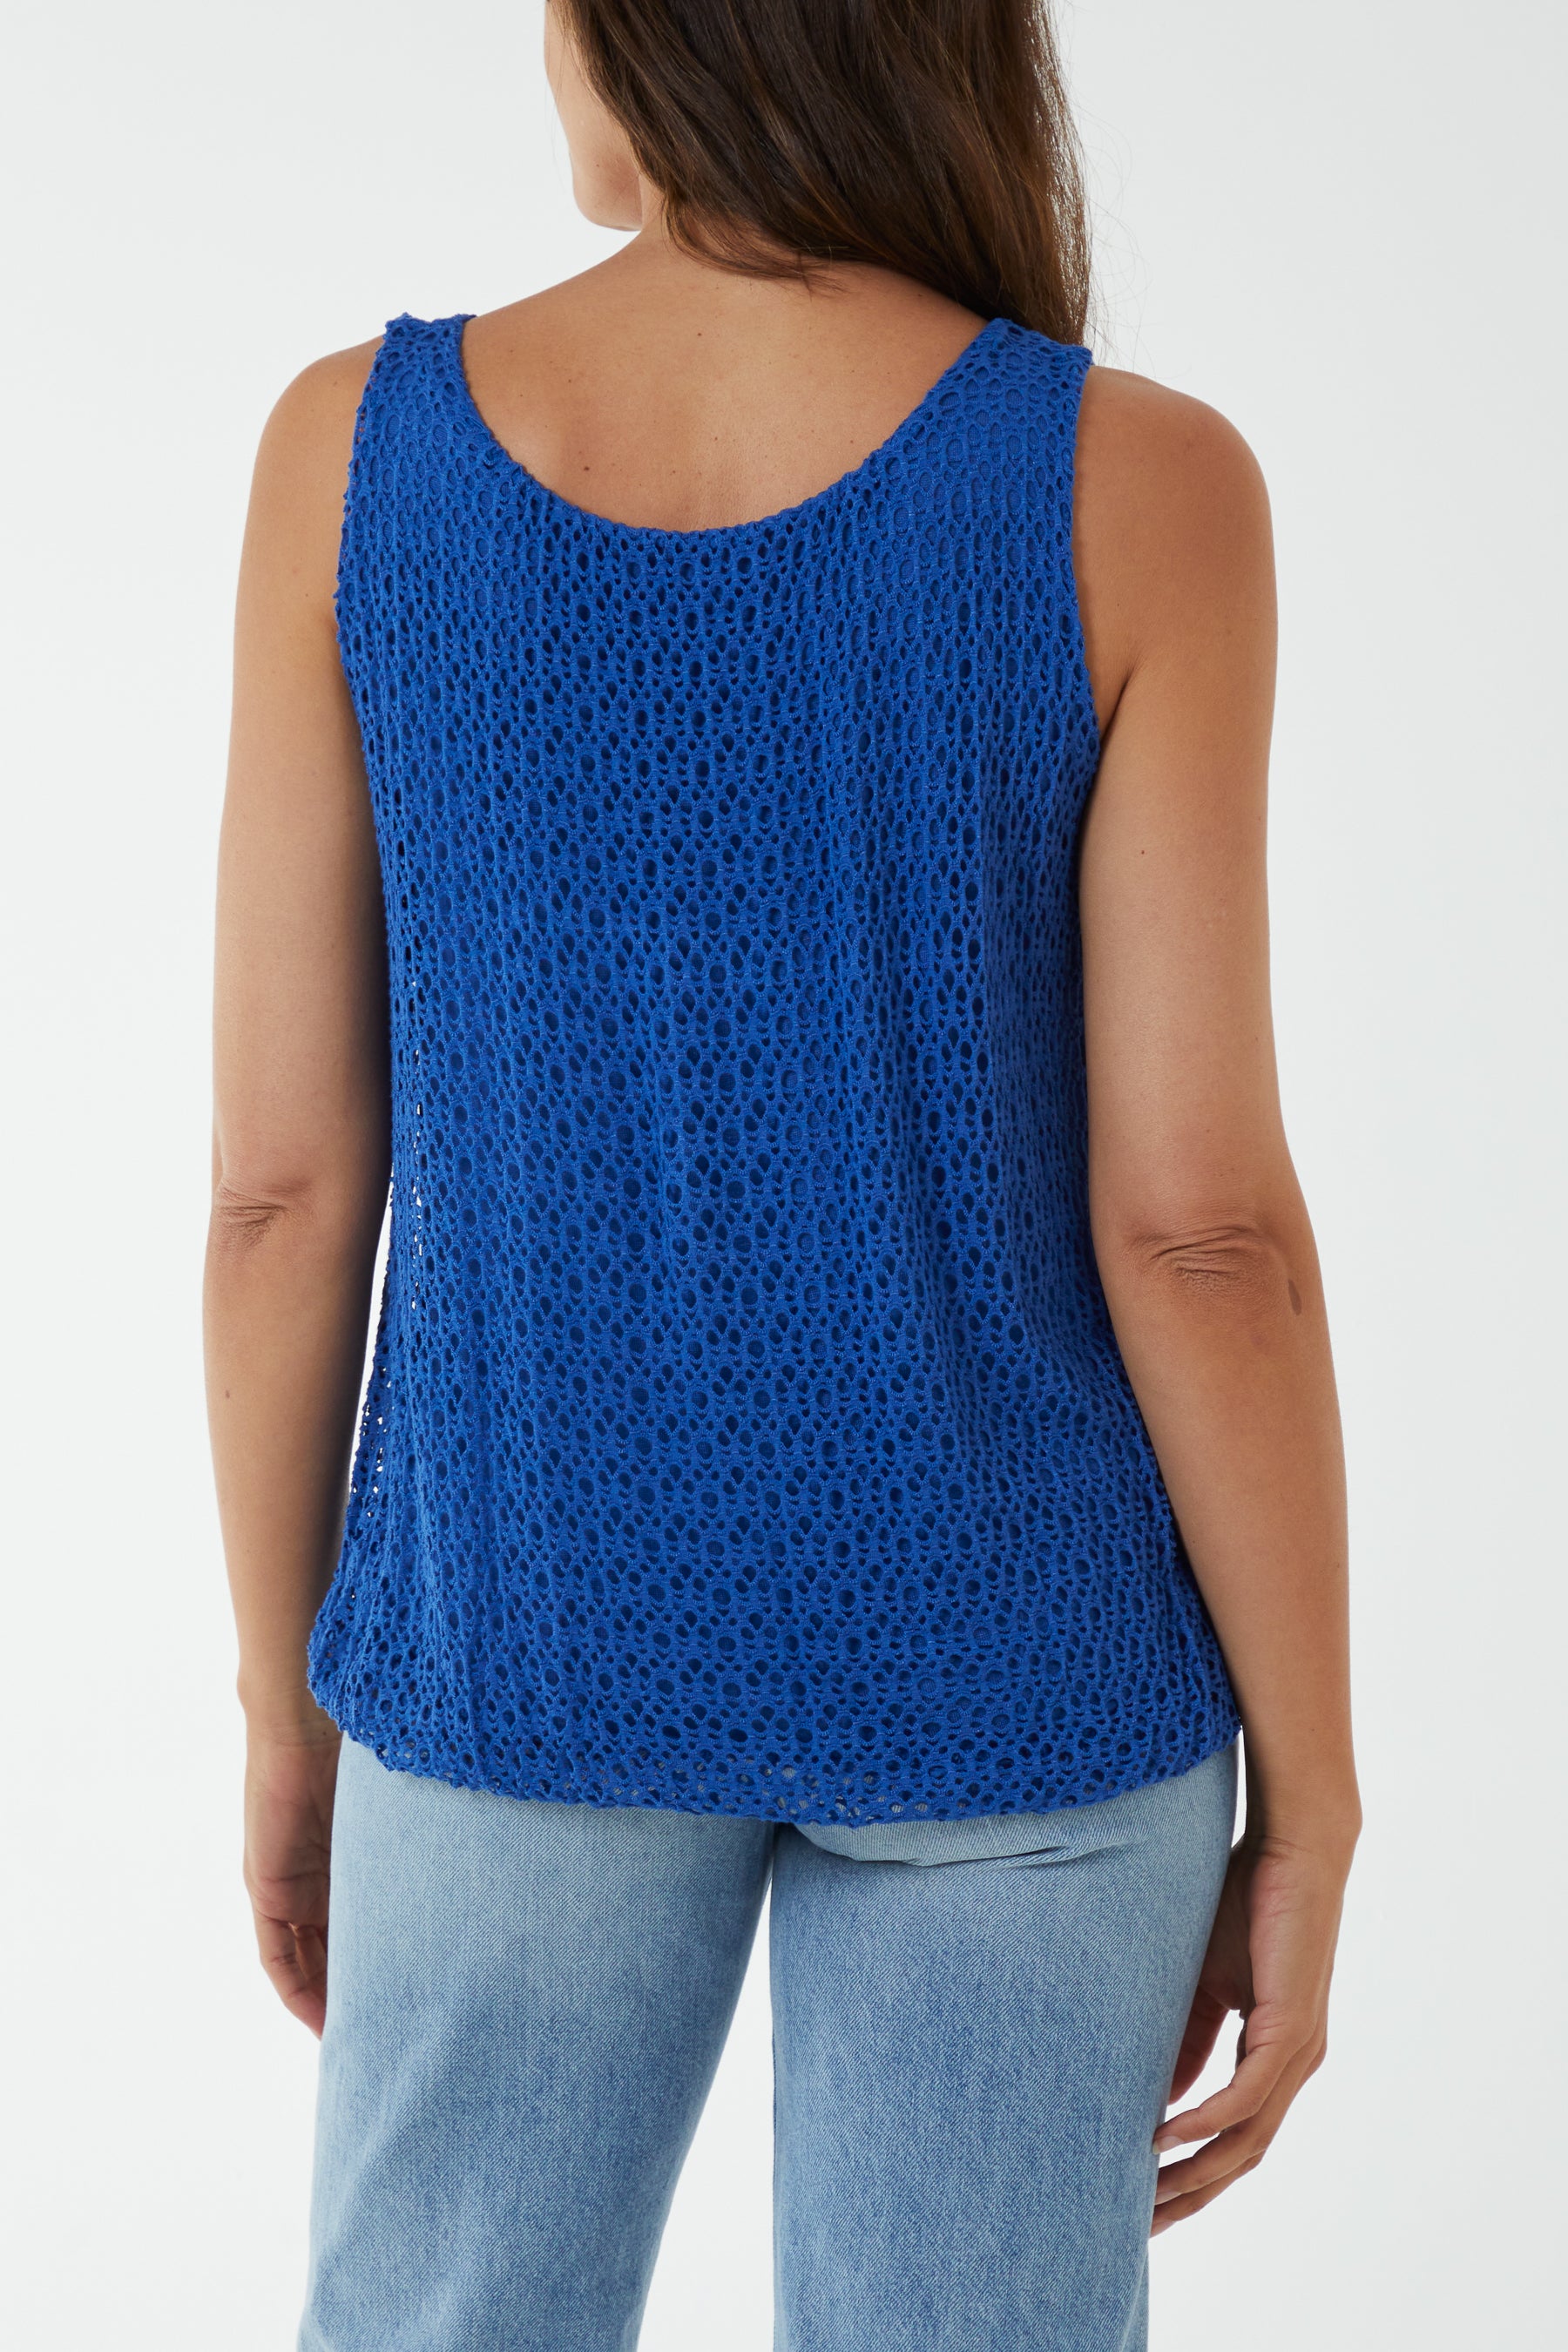 Sleeveless Lace Crochet Vest Top